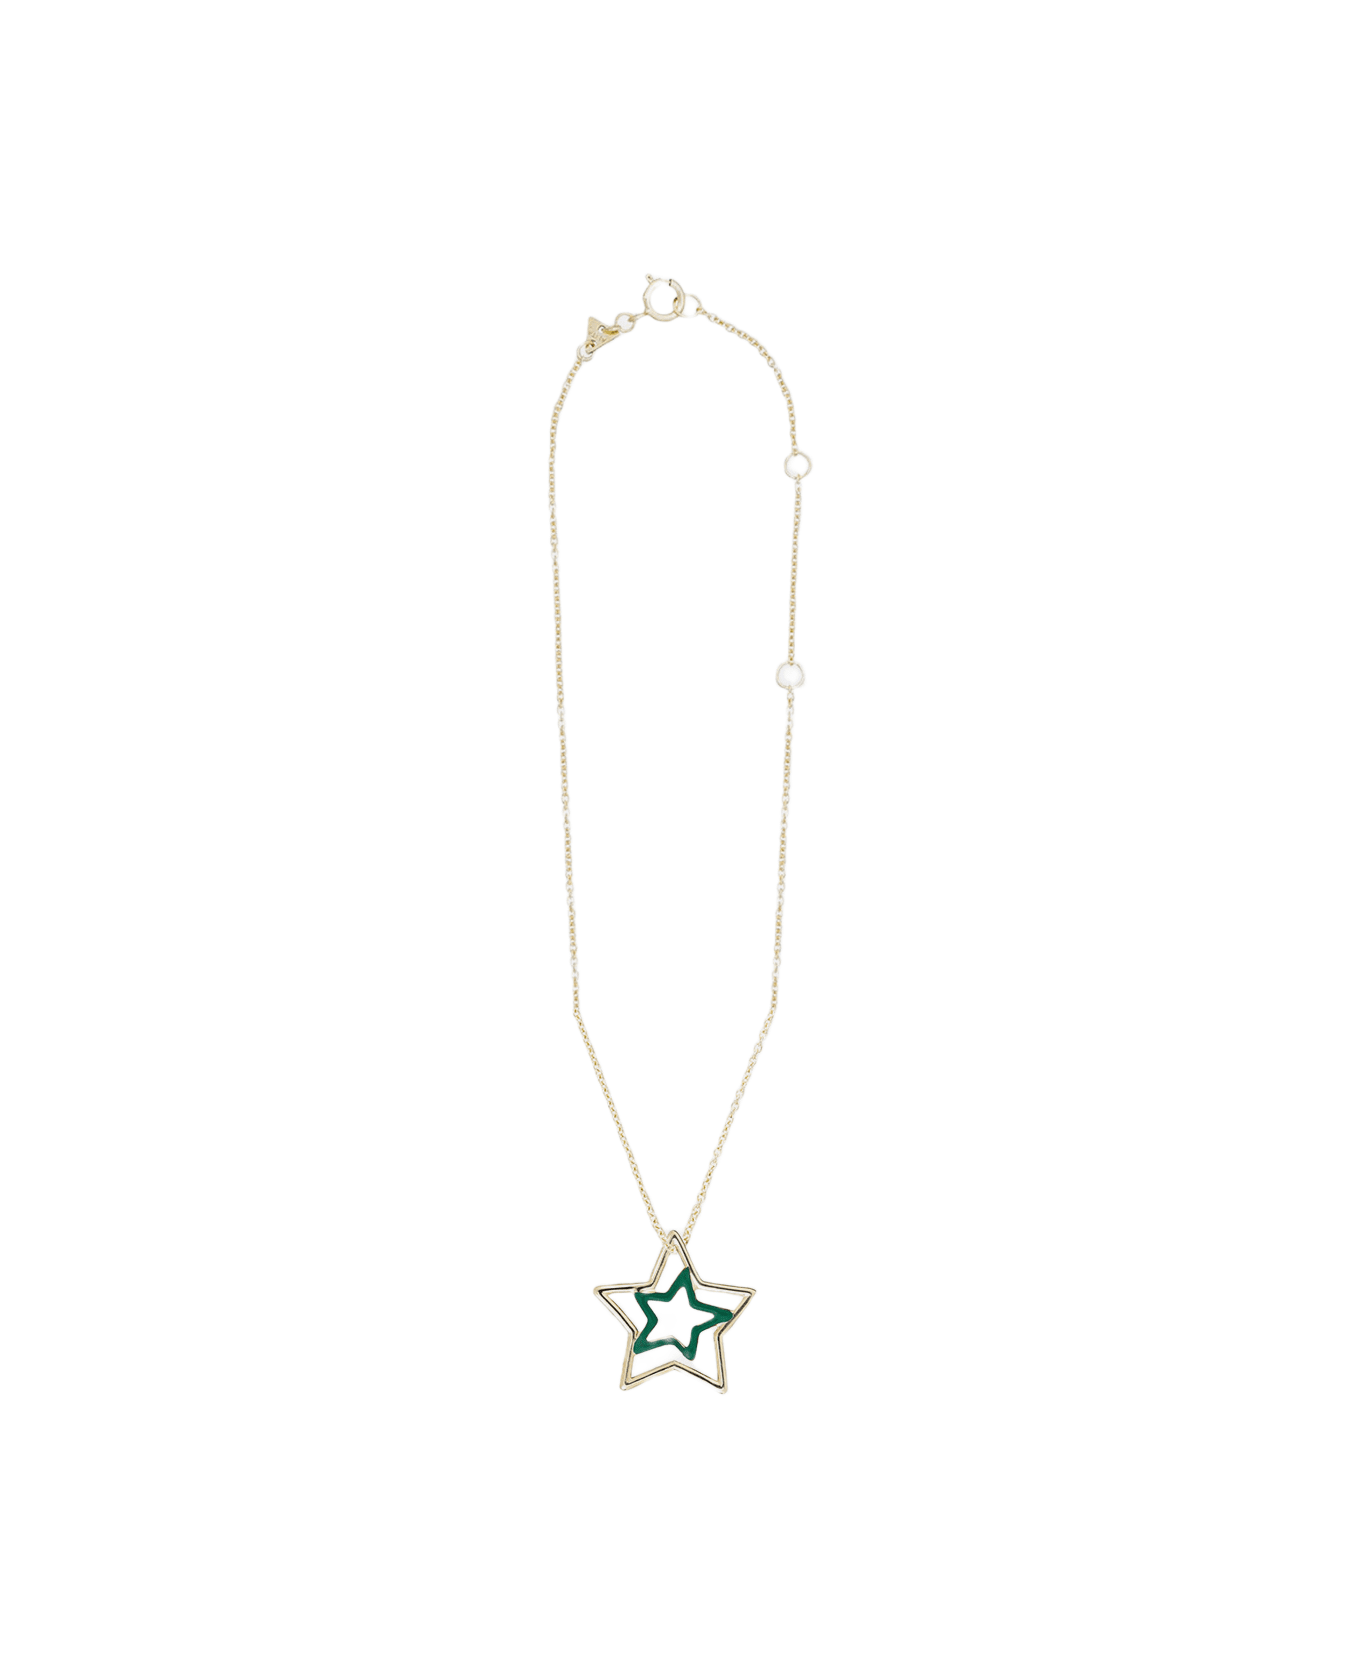 Aliita Bottle Green Gold Metal Estrella Necklace - Green